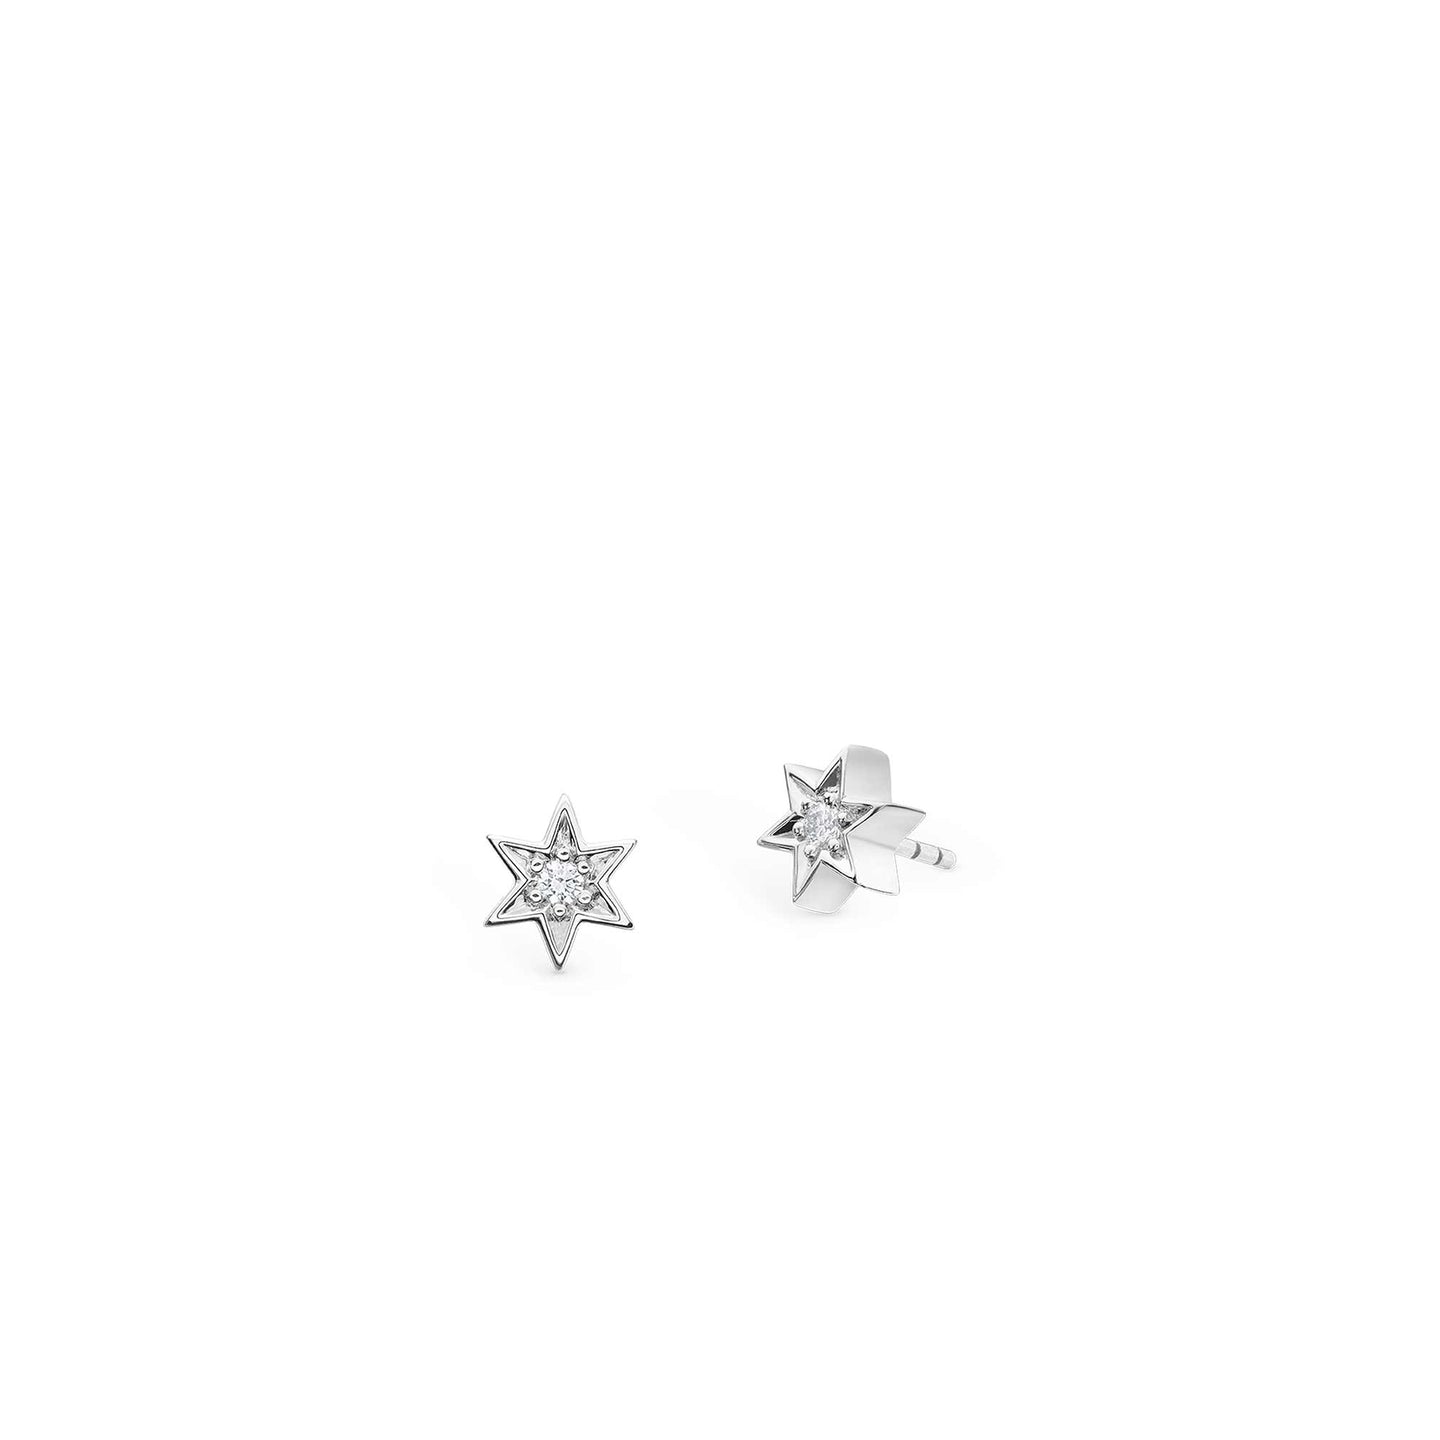 Cosmic Stargazer Earrings in 18ct White Gold with Diamonds